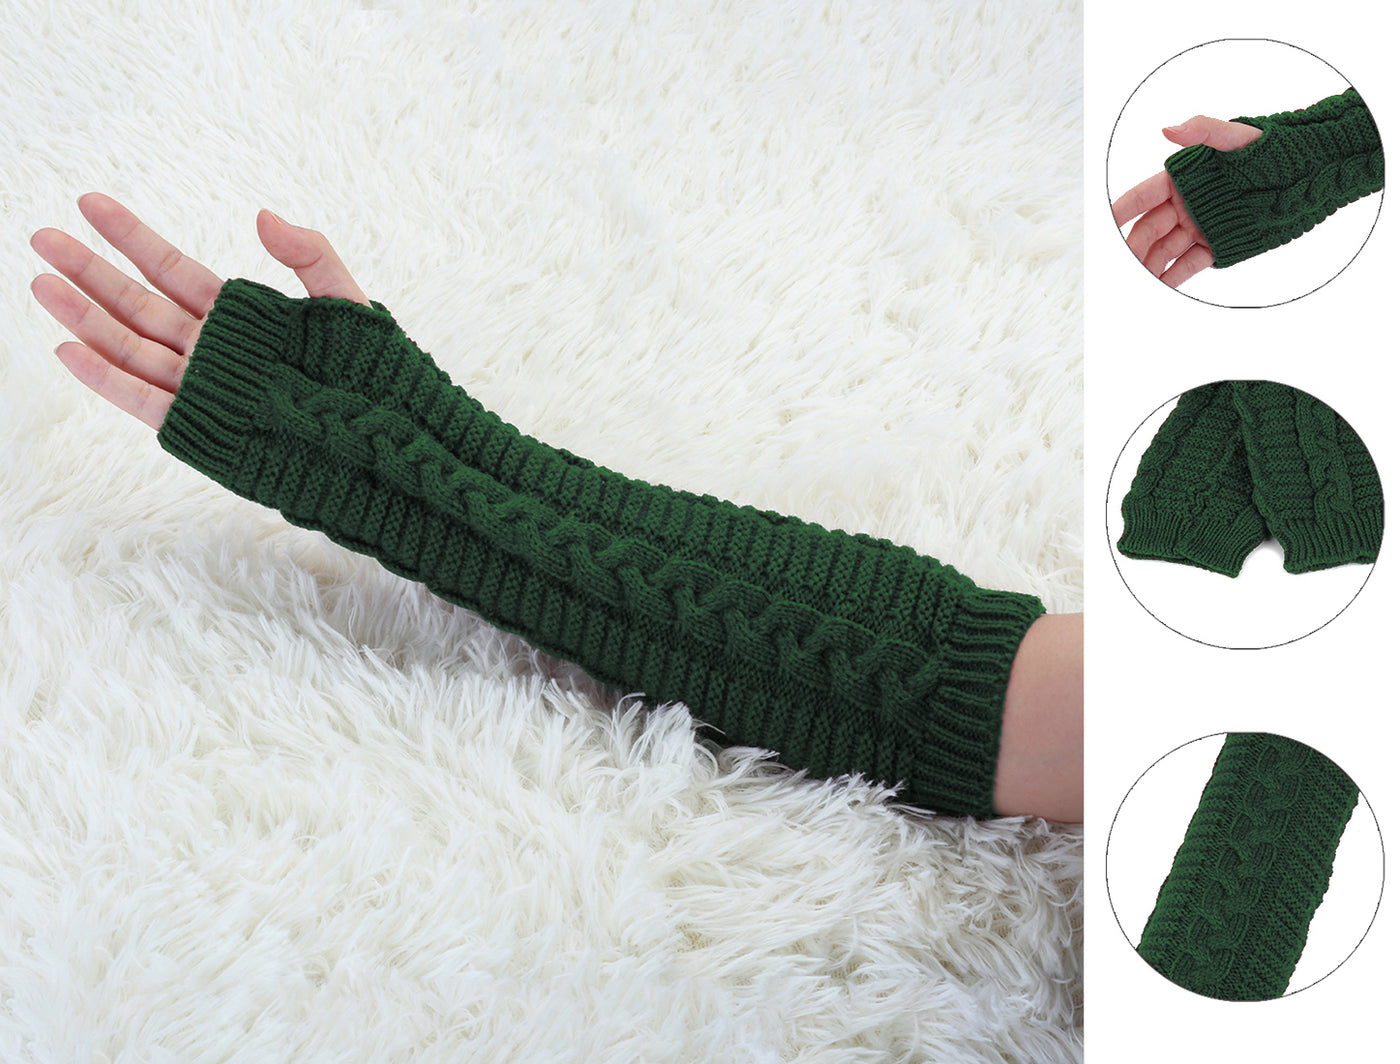 Allegra K Women's Fingerless Glove Winter Knit Thumb Elbow Length Arm Warmers